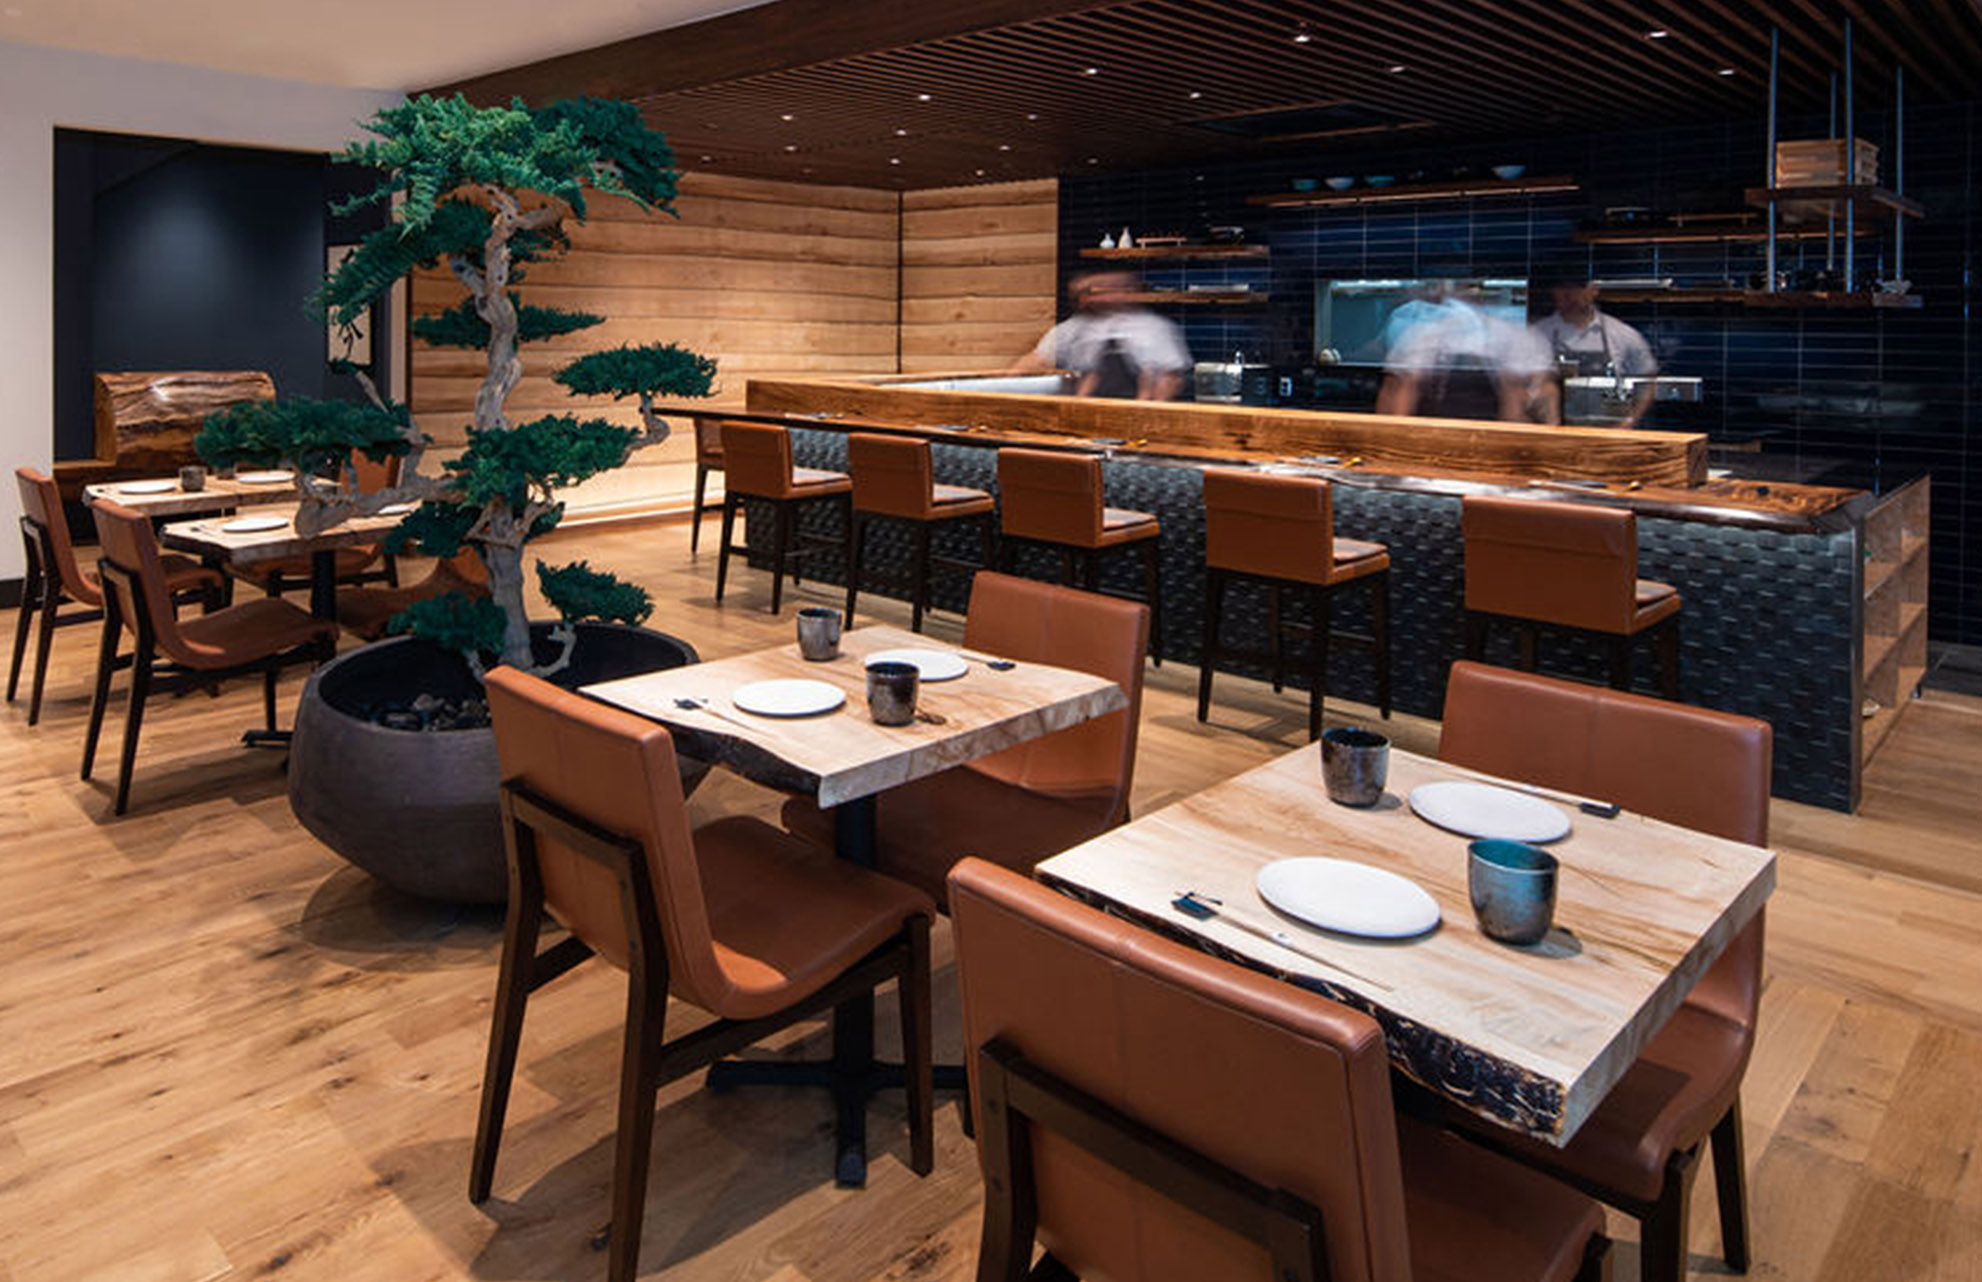 Kampai-sushi-jackson-hole-restaurant-seating